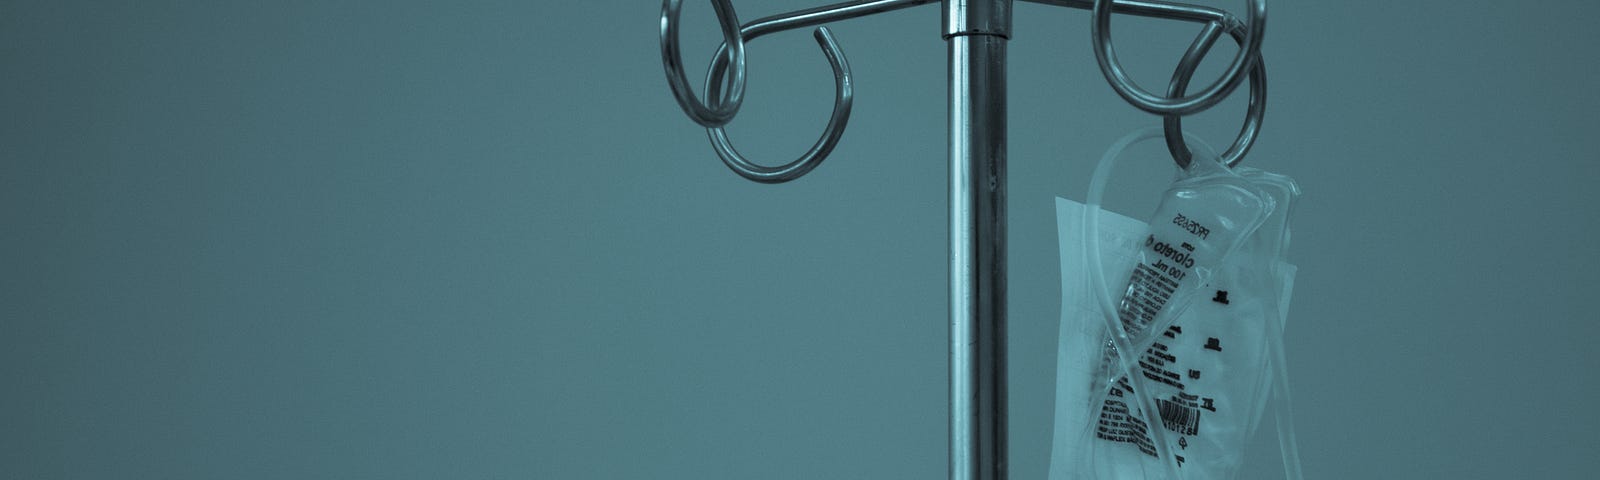 An iv pole with an iv bag, and blue mood lighting.